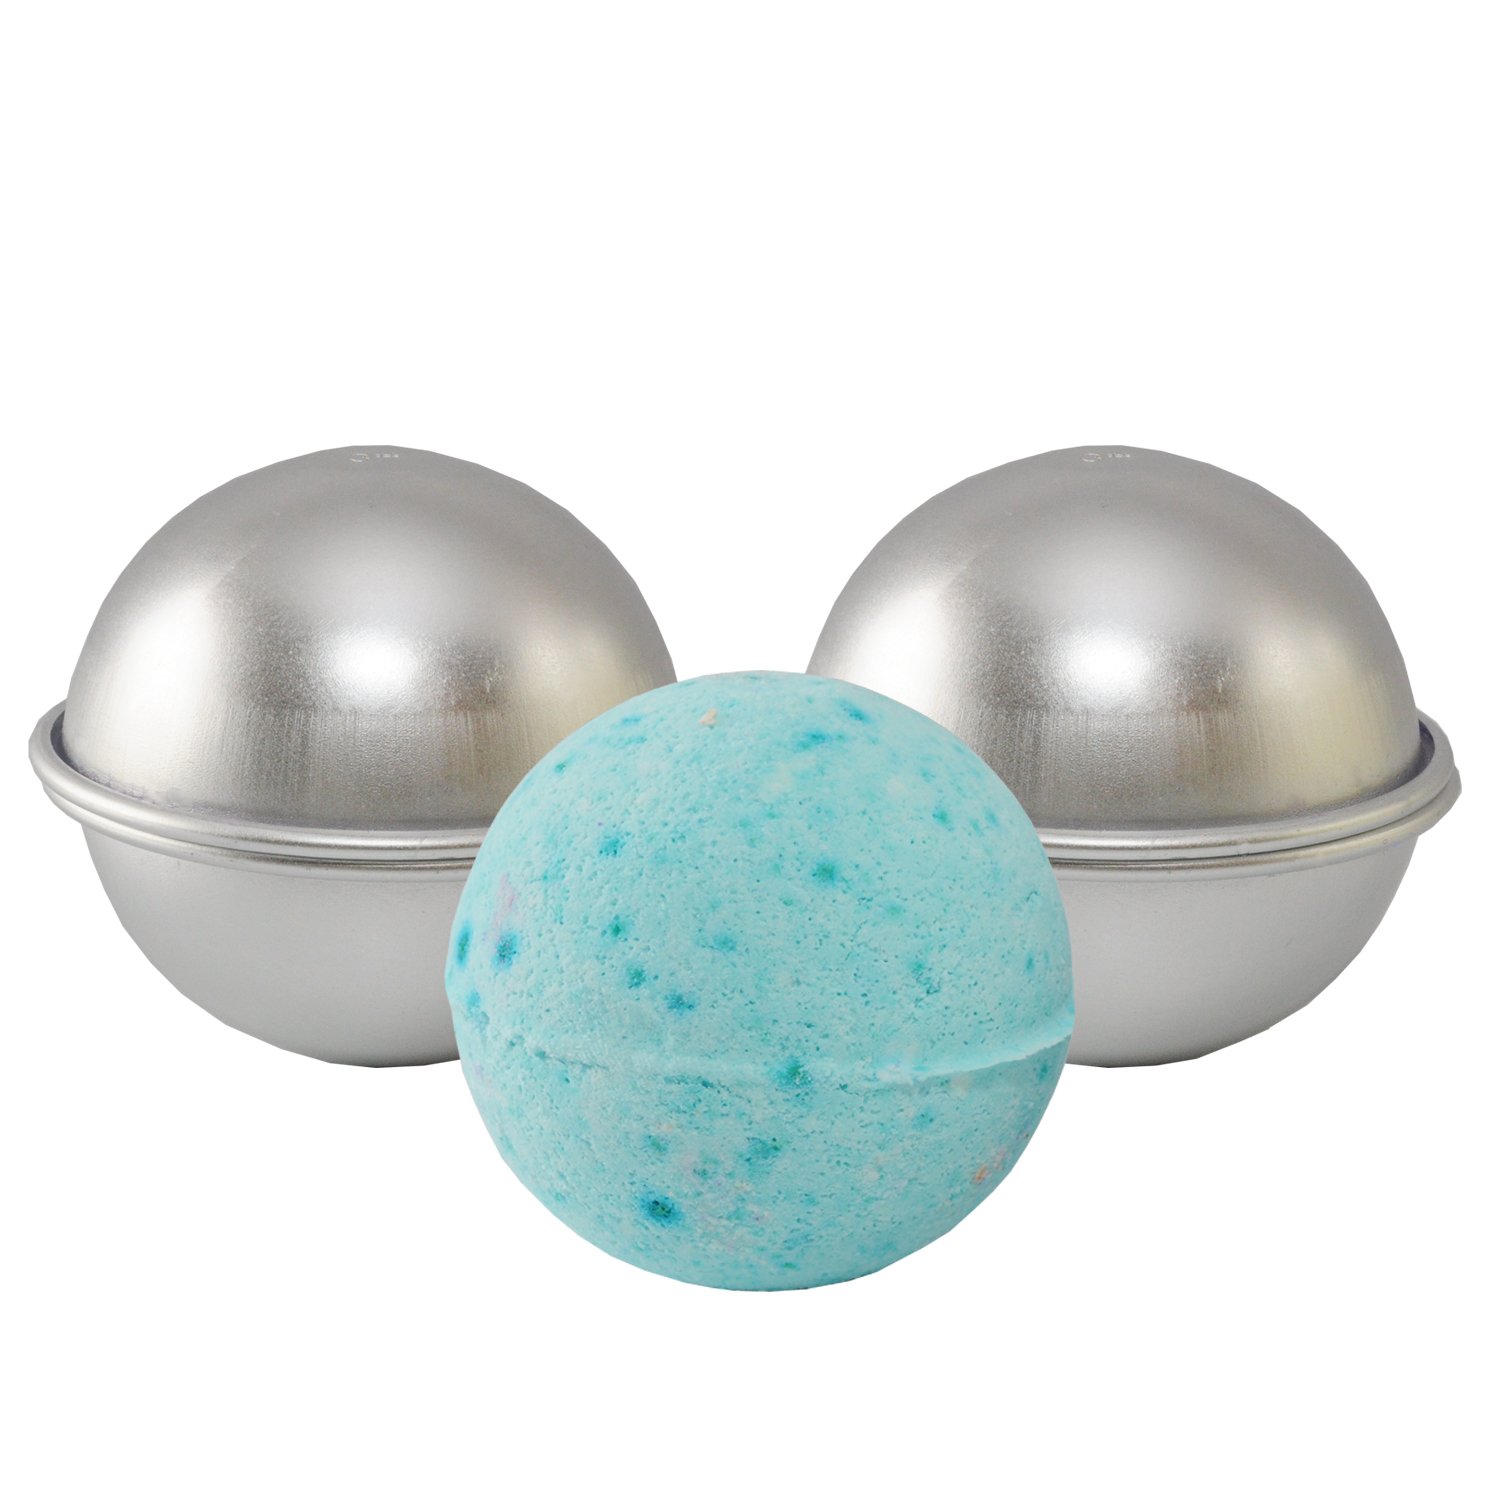 Metal Bath Bomb Mold - DIY - Make Luxurious Bath Bombs - 2 Molds